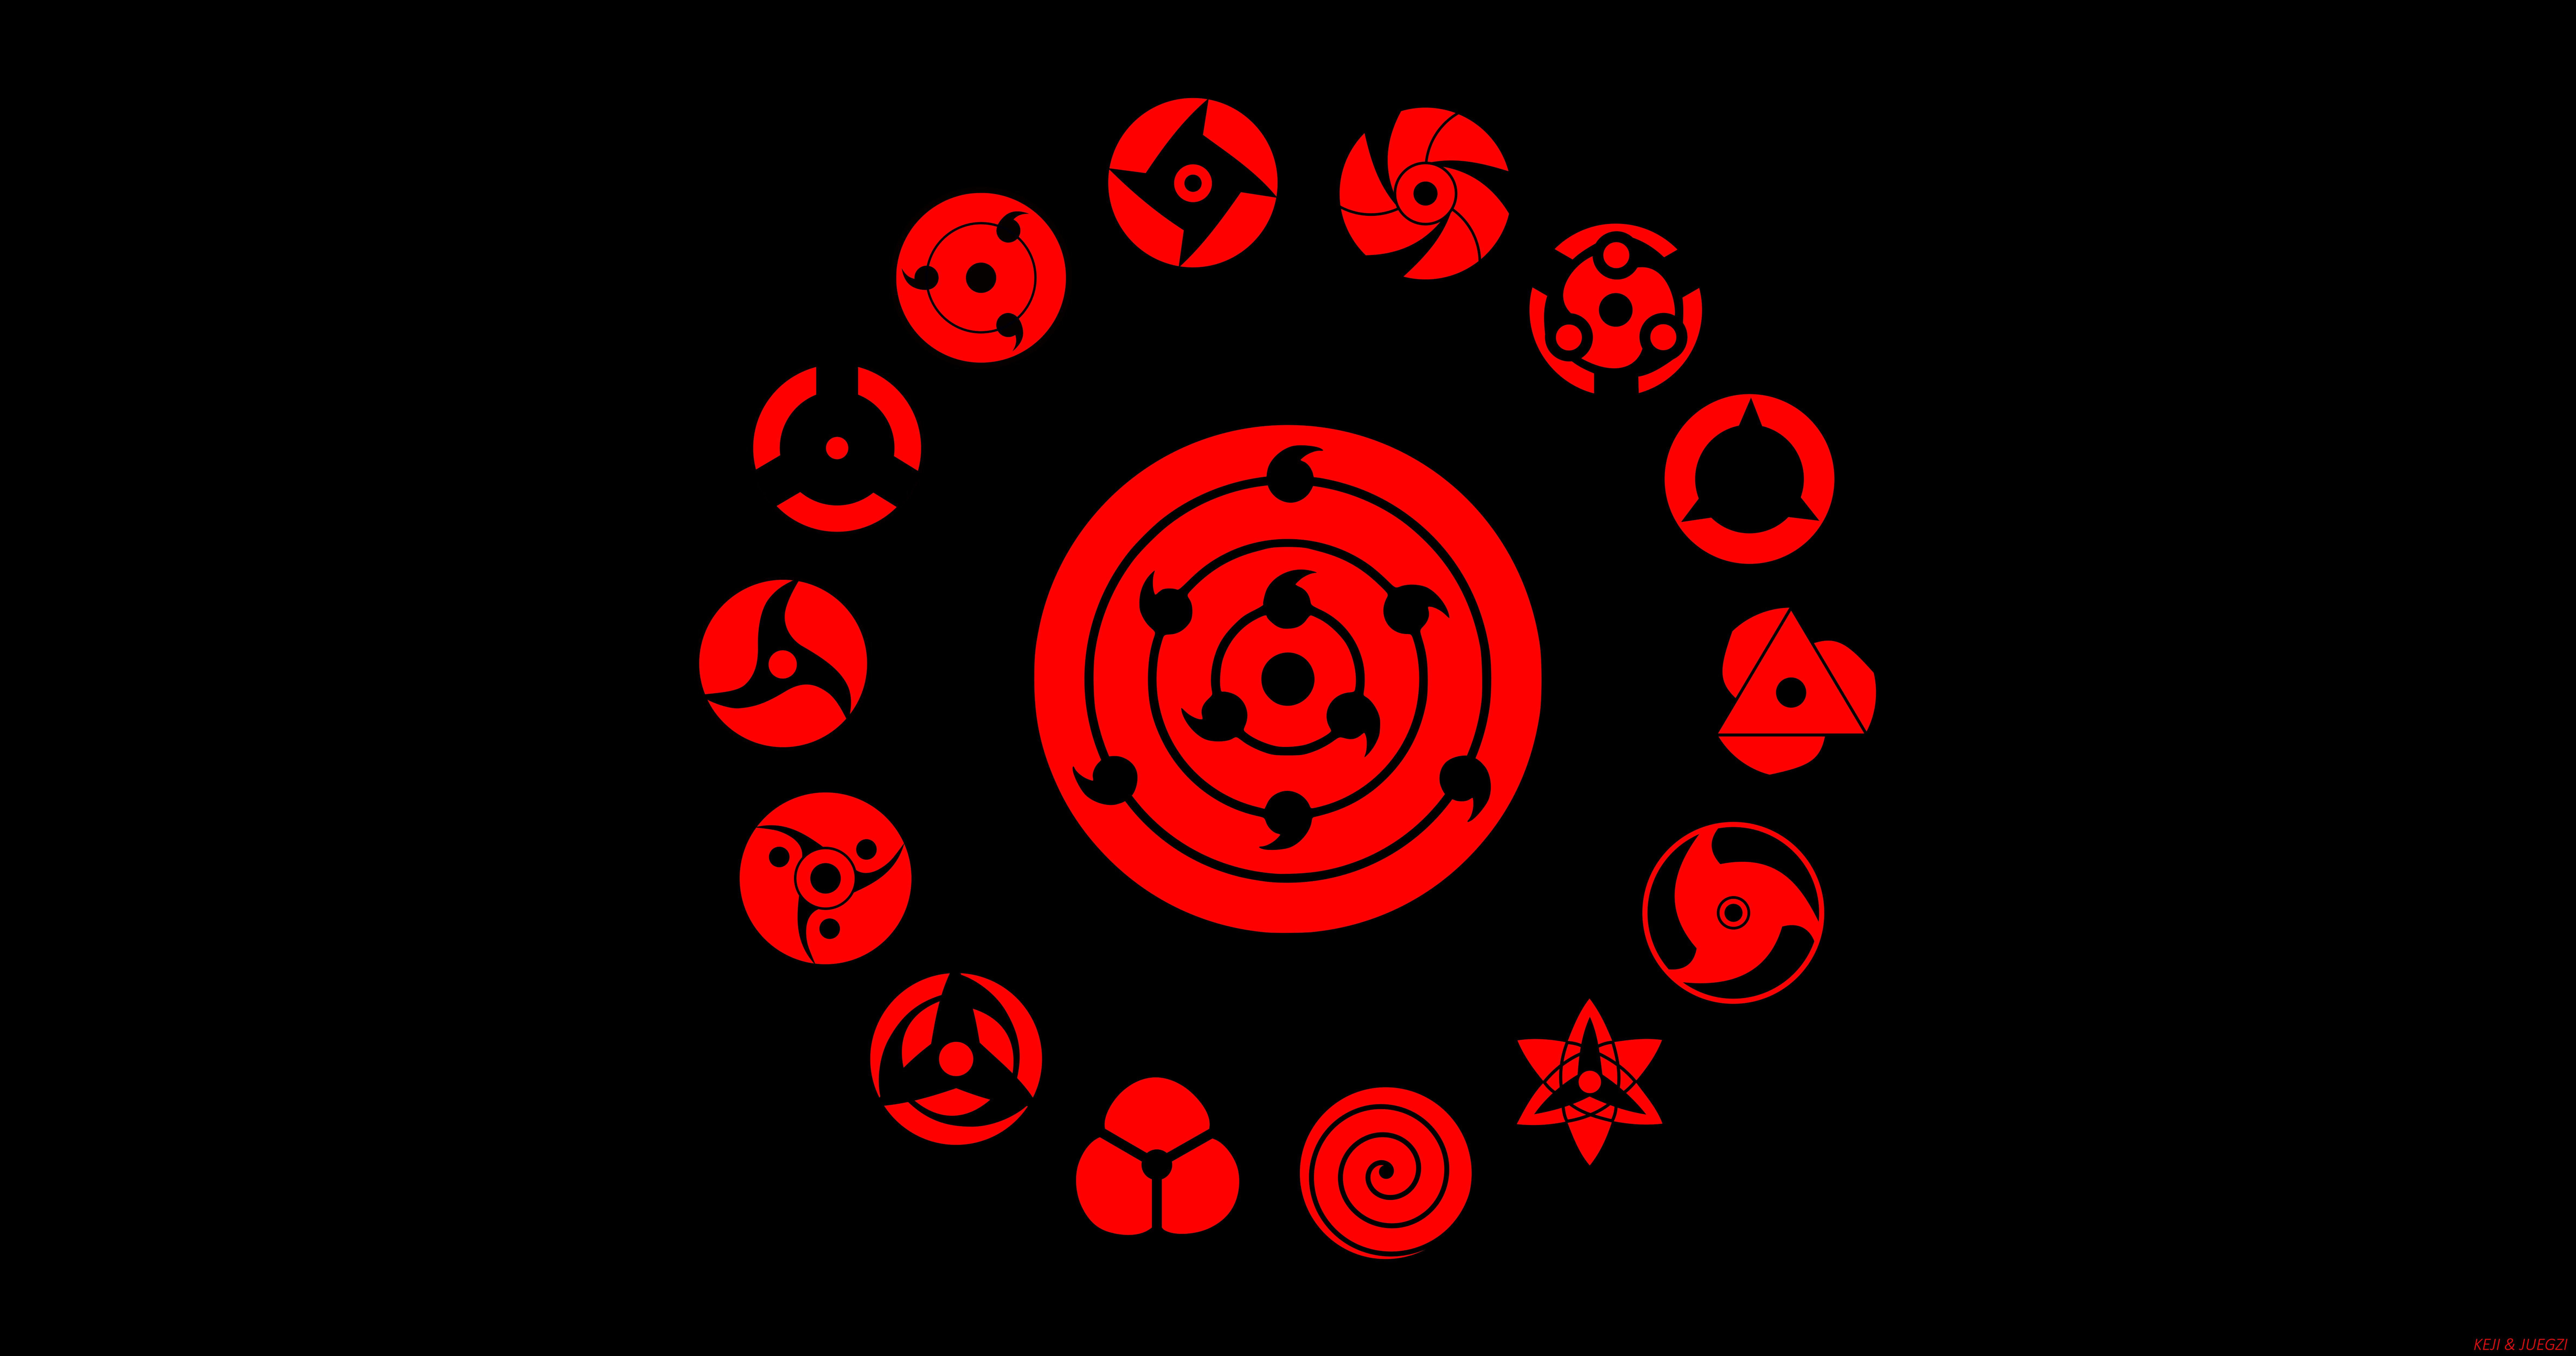 sharingan (naruto), naruto, boruto (anime), mangekyō sharingan, anime, red